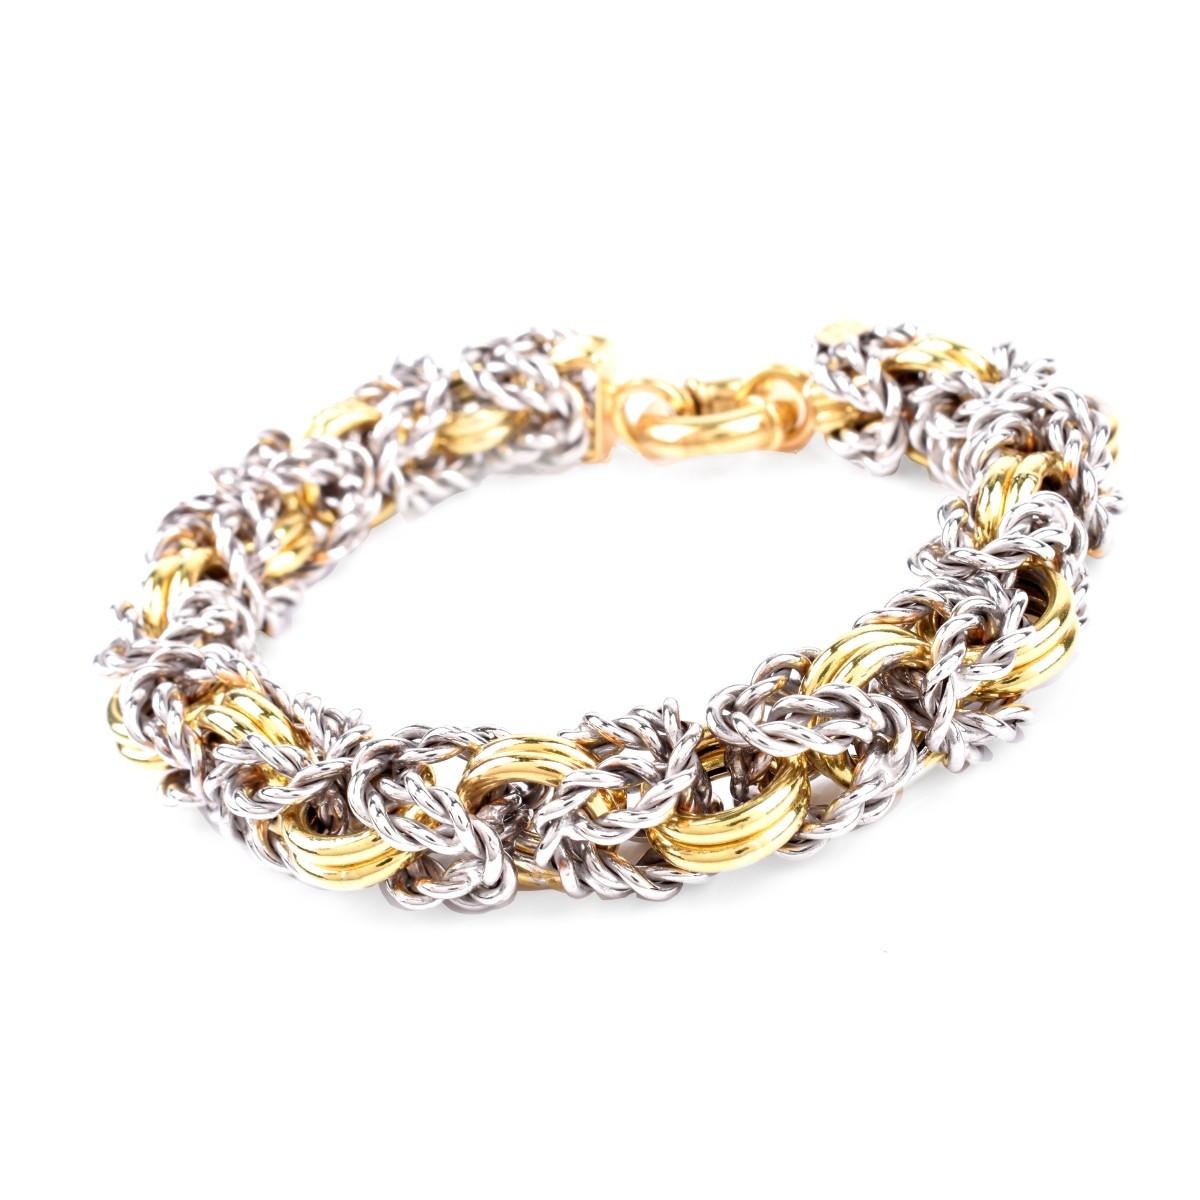 Italian 18K Gold Link Bracelet - Image 2 of 6